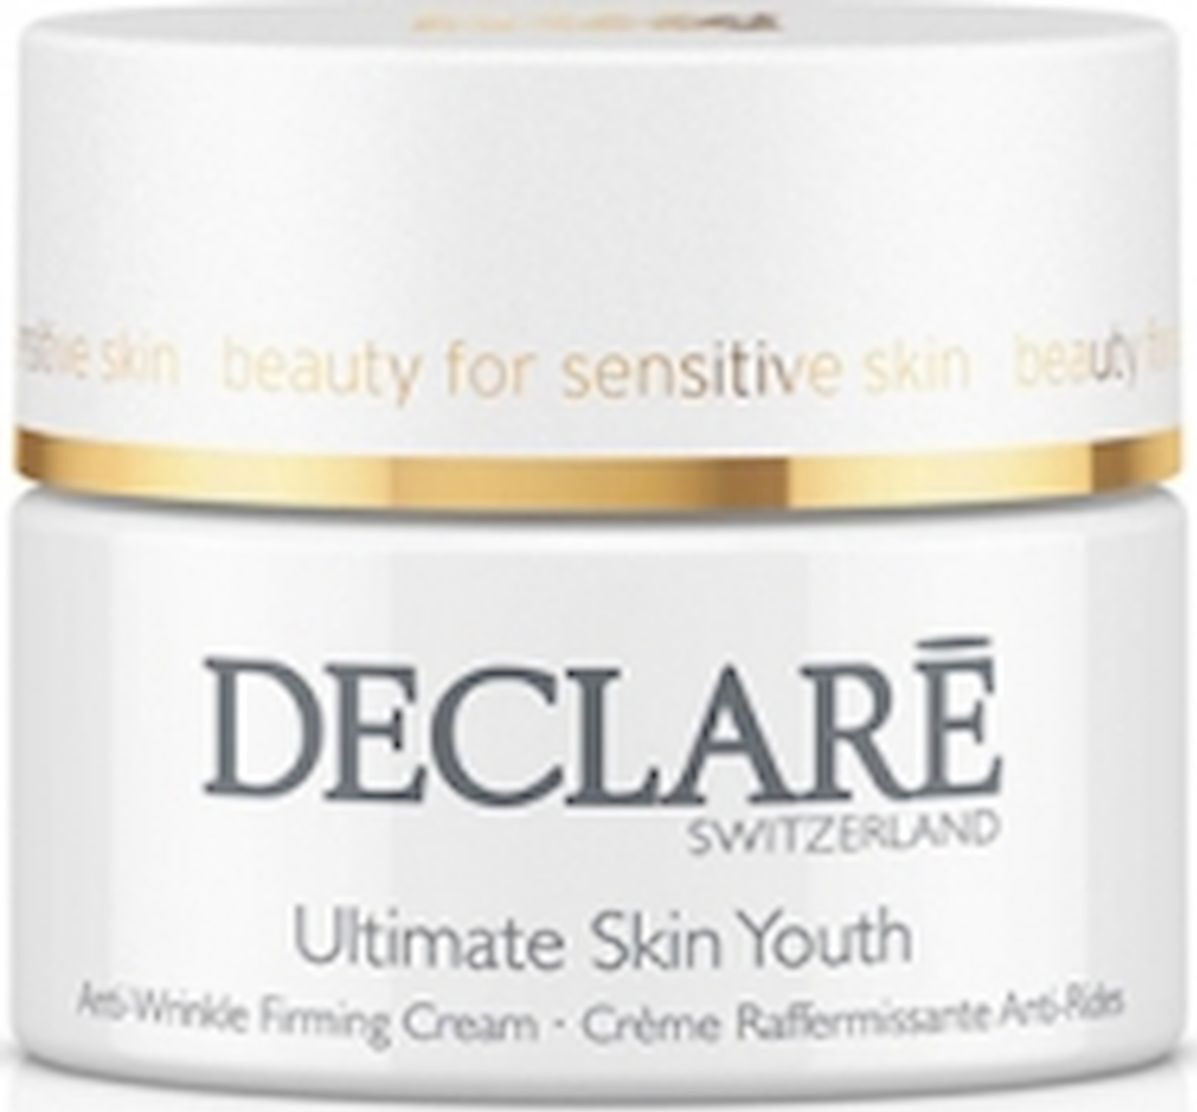 фото Declare Интенсивный крем для молодости кожи Ultimate Skin Youth, 50 мл